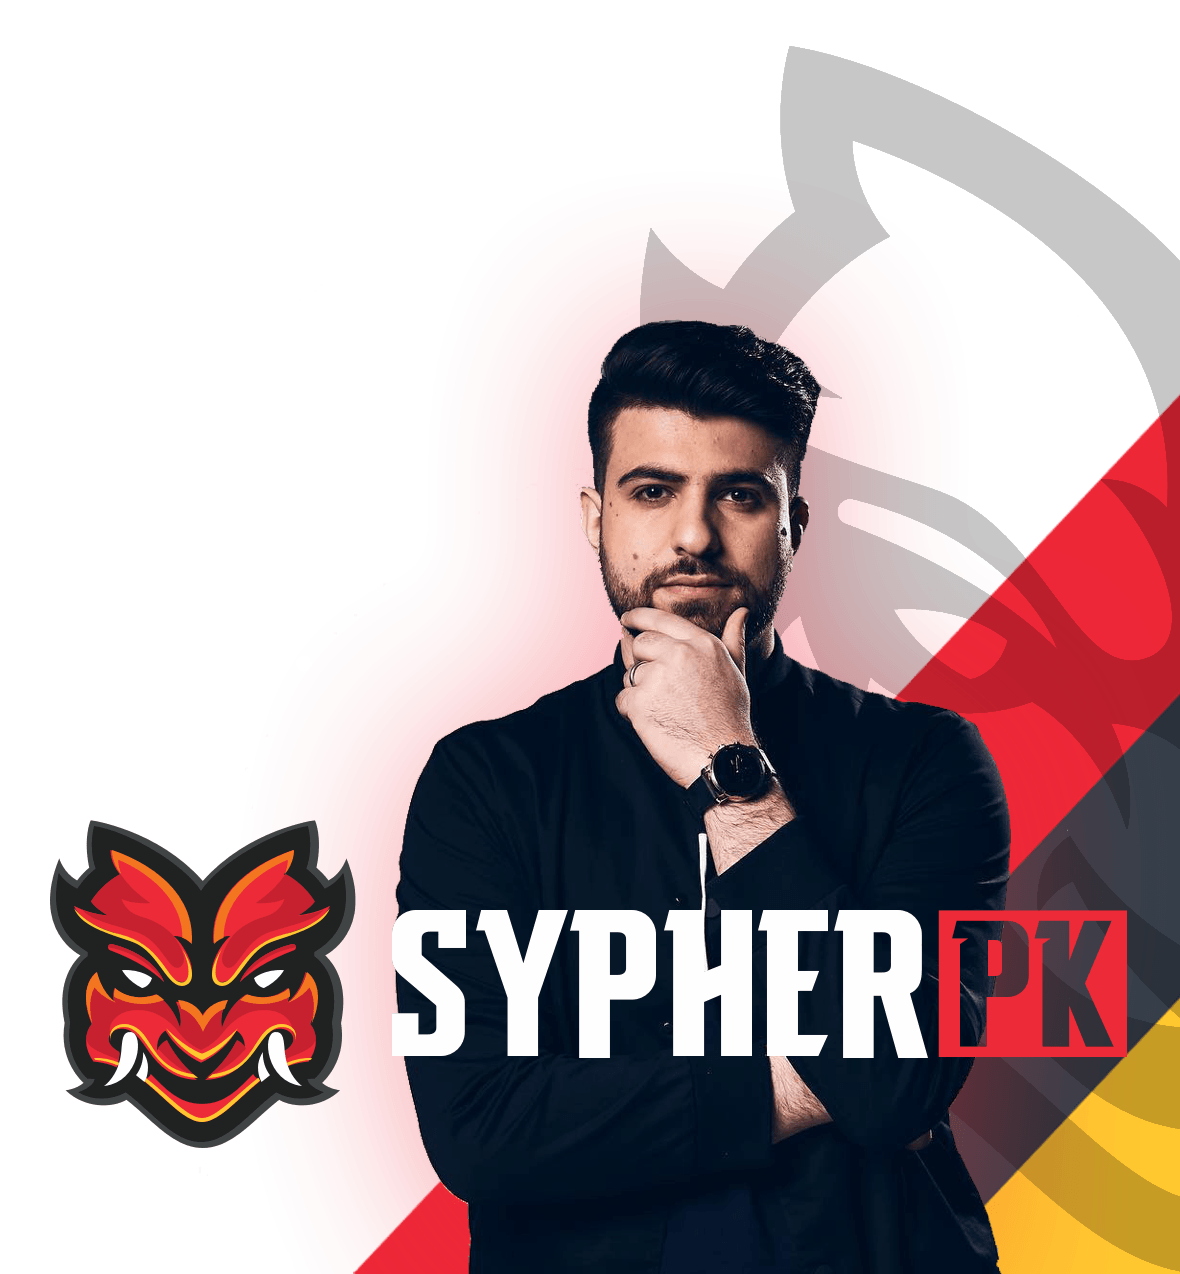 Sypherpk Merch